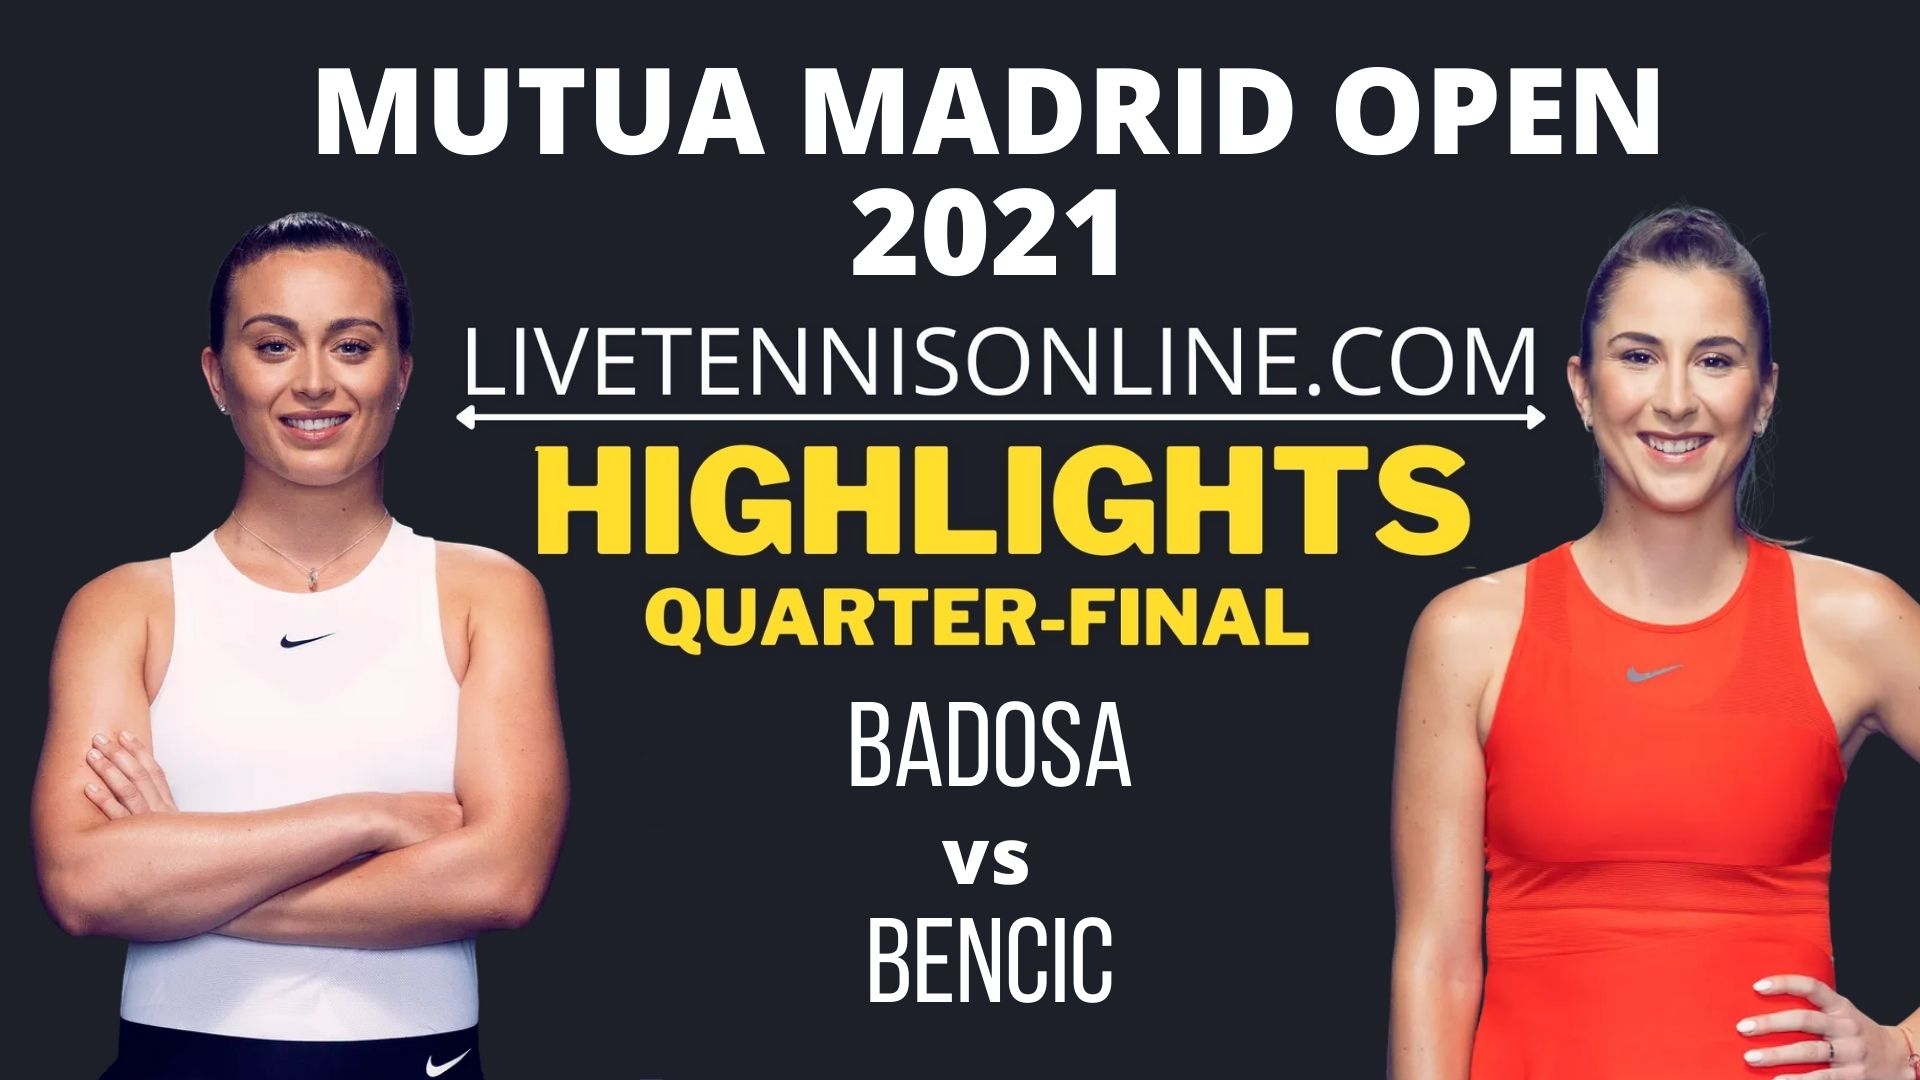 Badosa Vs Bencic Quarter Final Highlights 2021 Madrid Open